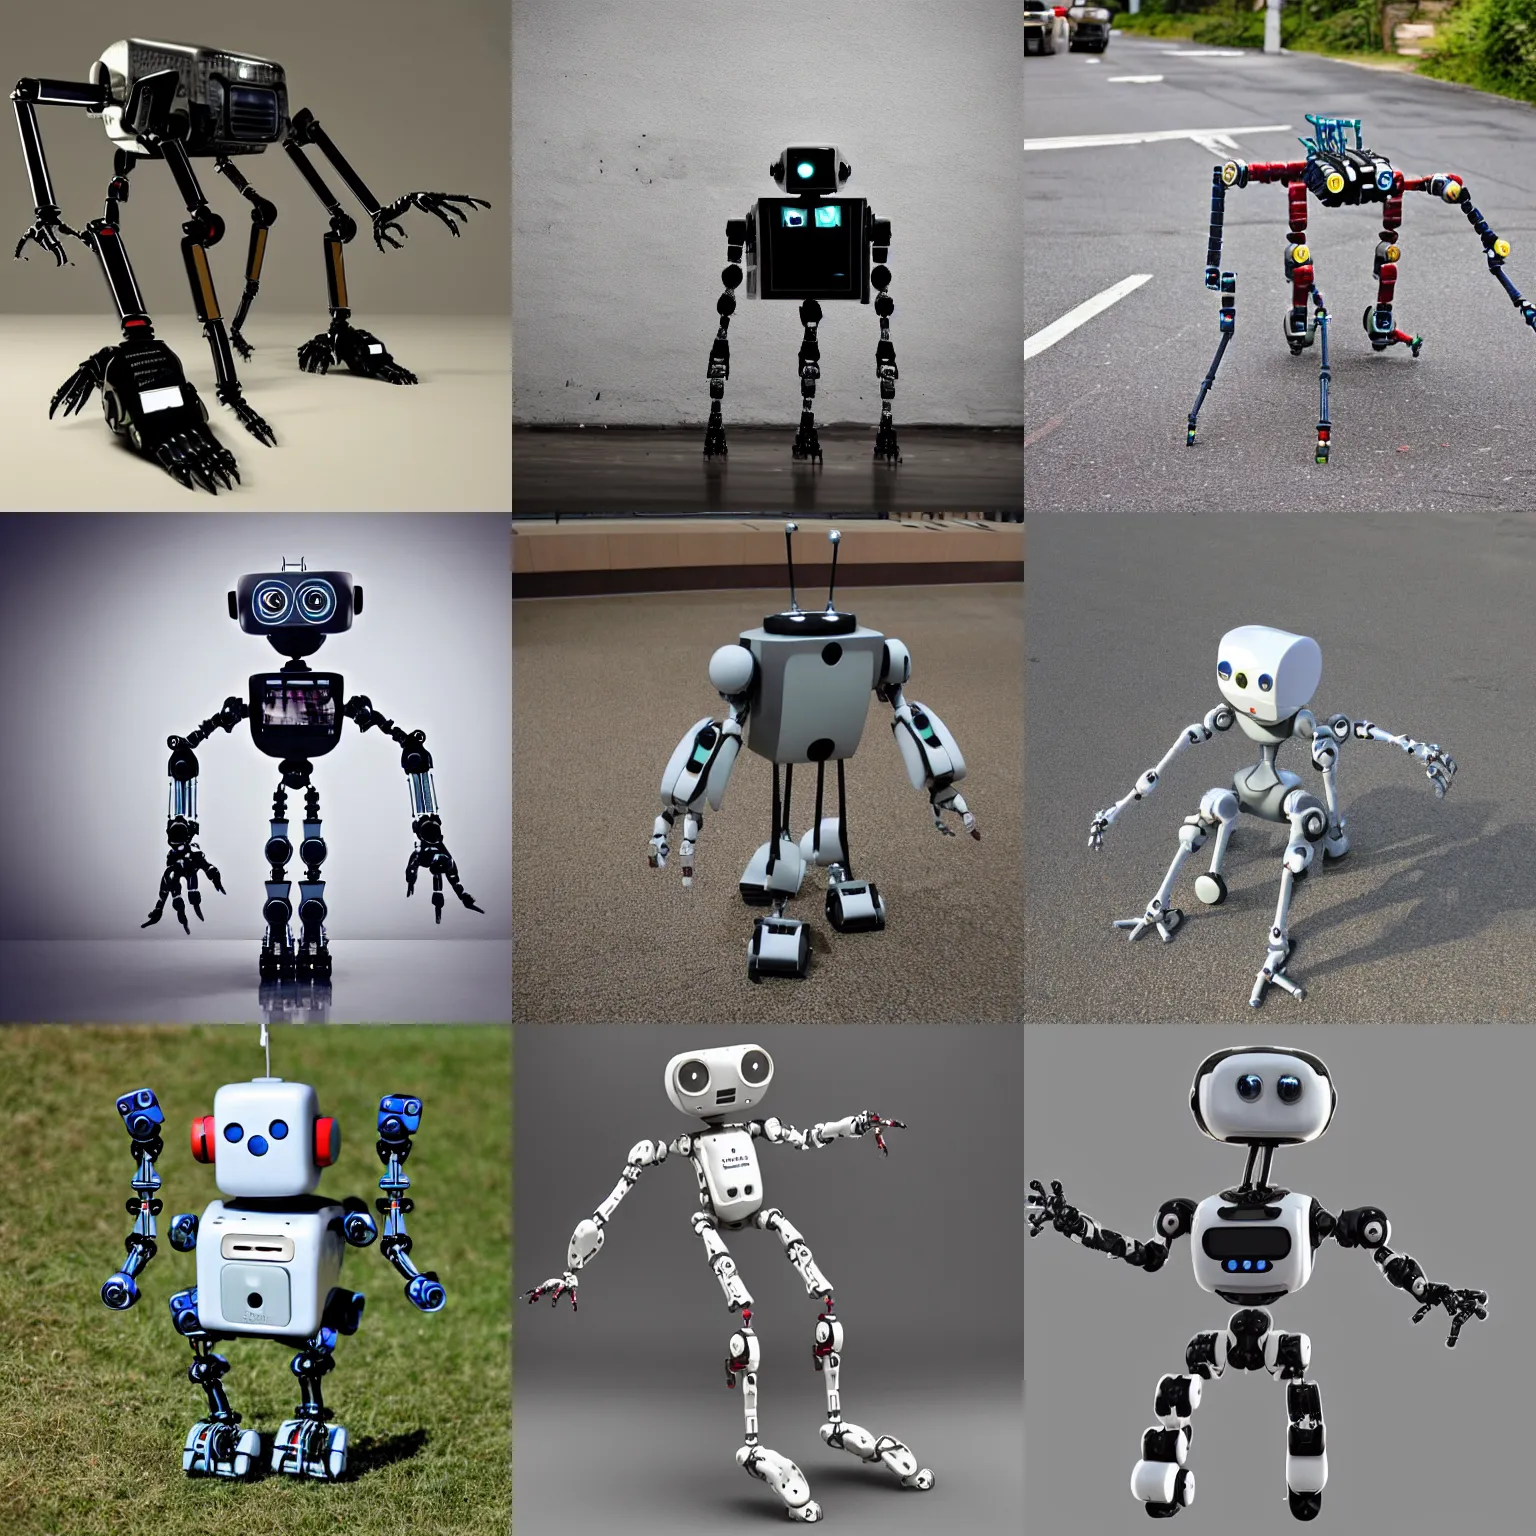 Prompt: six legged robot with six legs